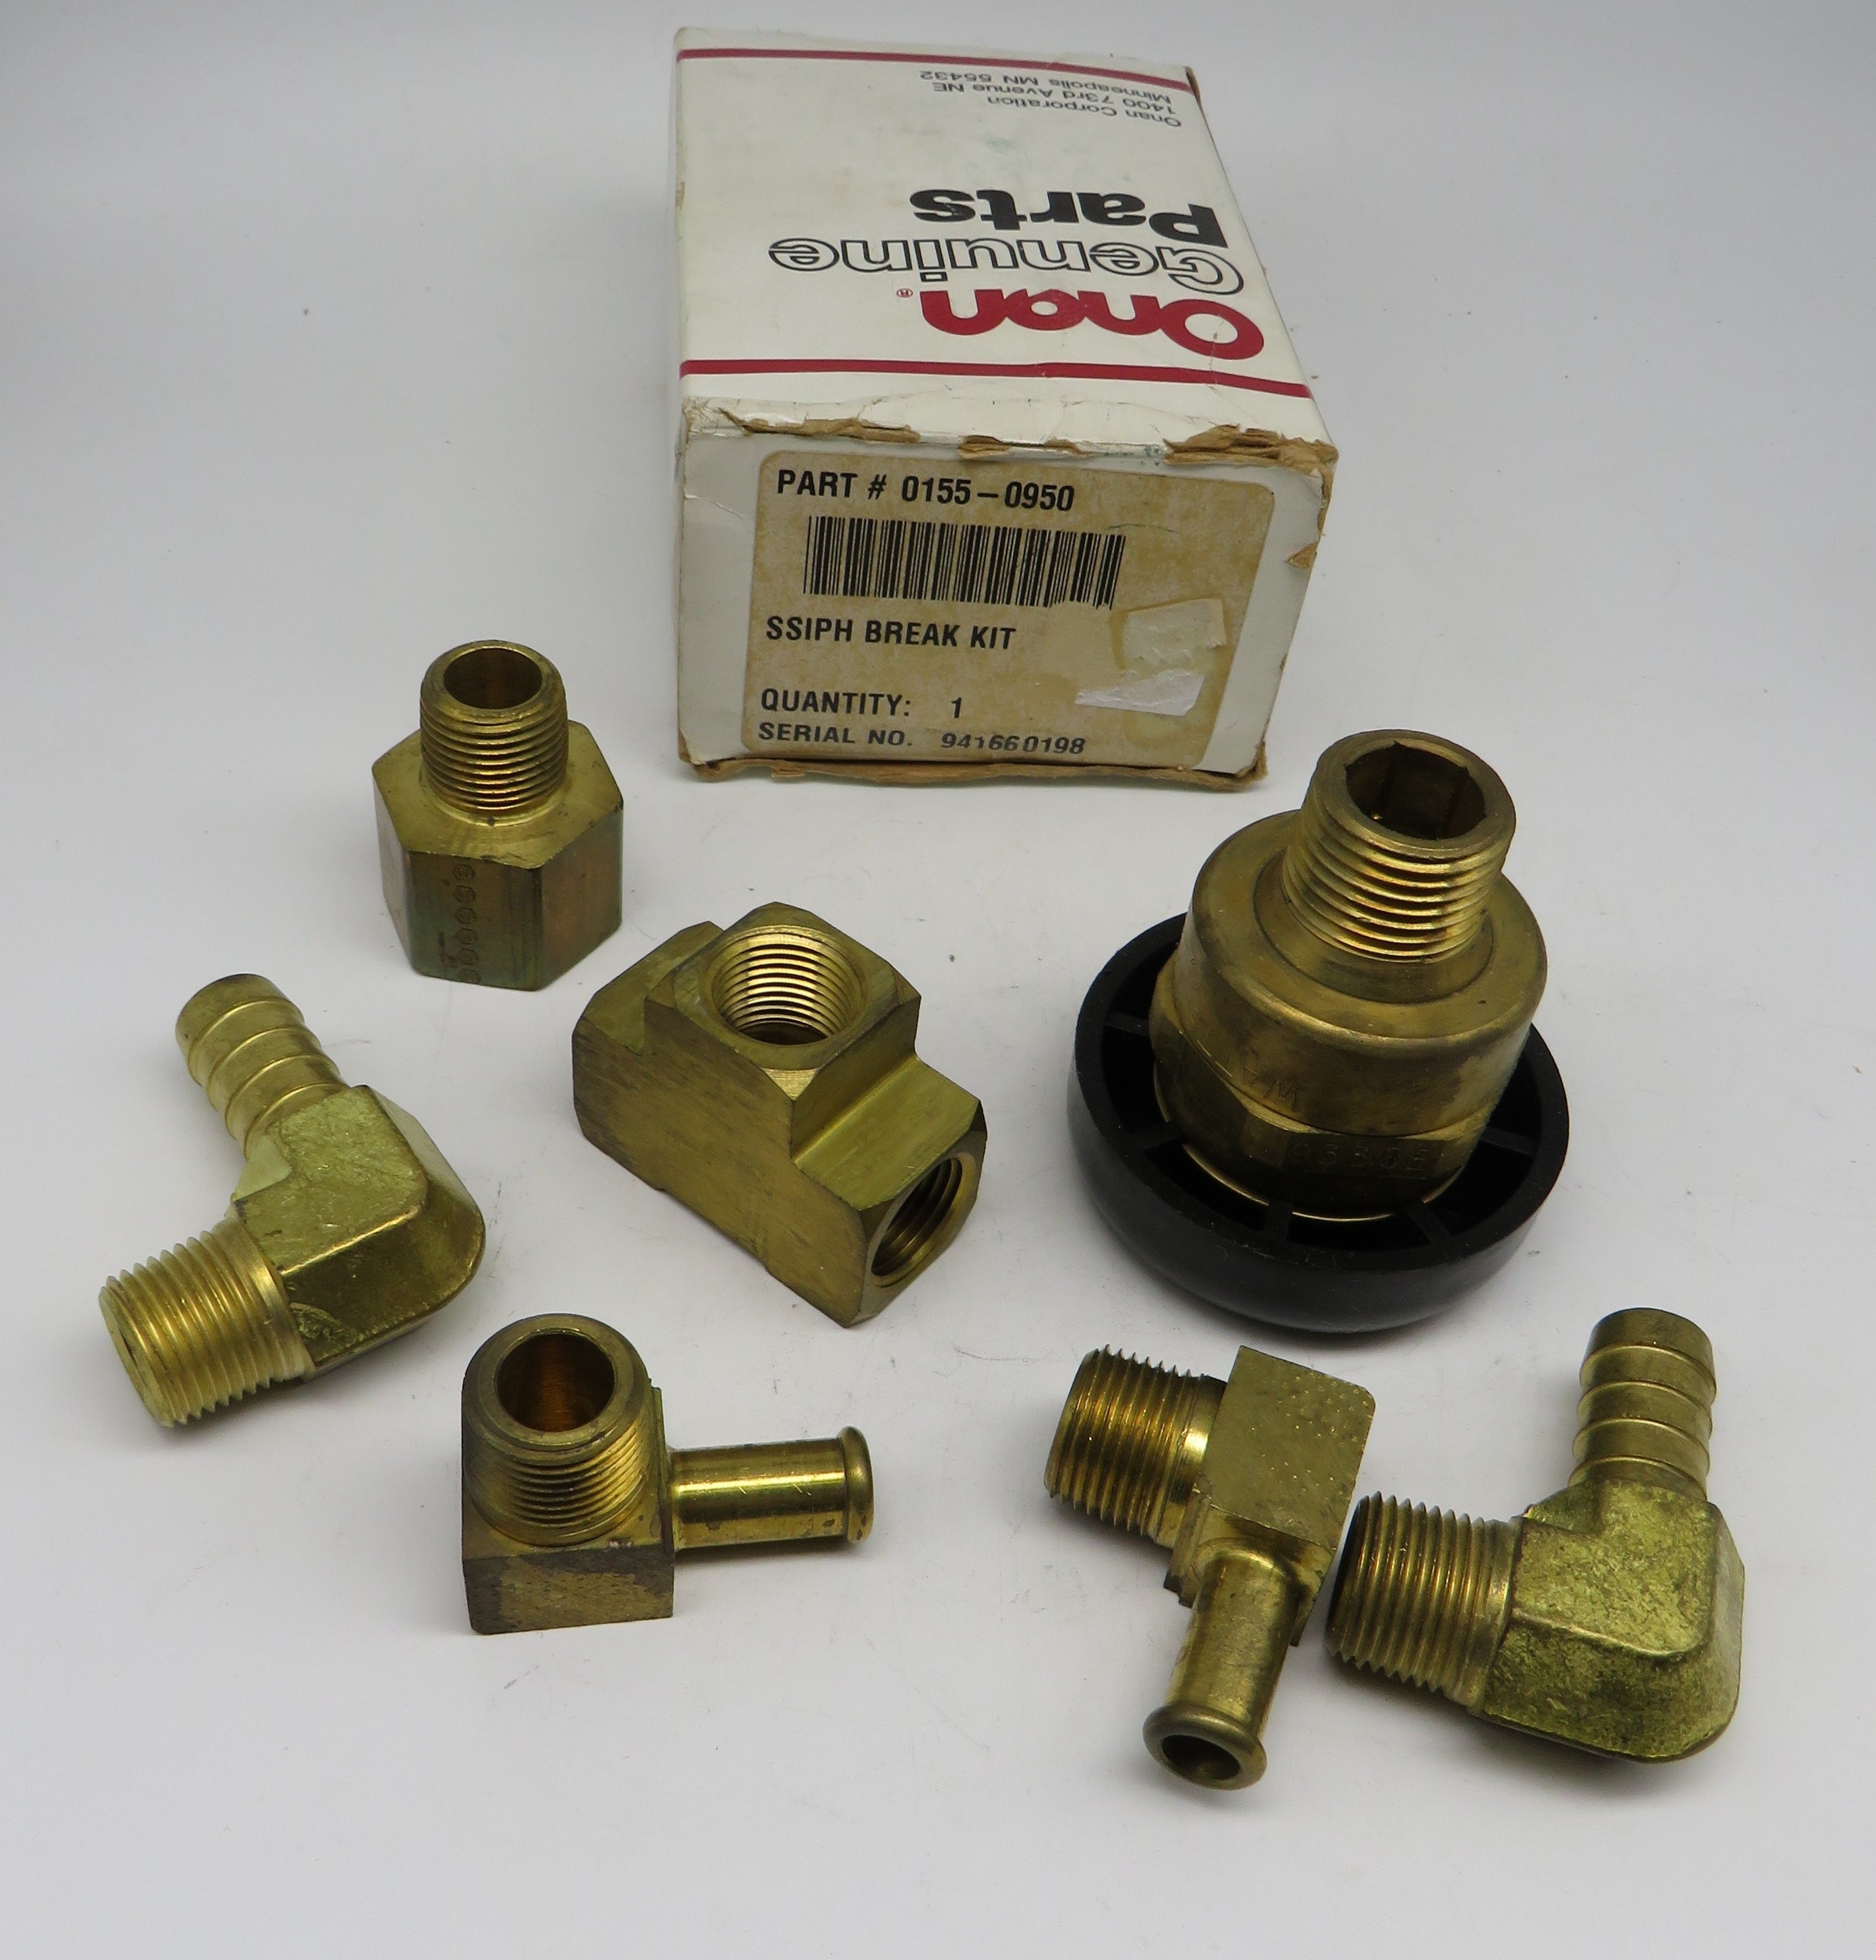 155-0950 Onan Siphon Breaker Kit Replaced by 541-0863-01 for MCCK (Spec H-J) OBSOLETE 